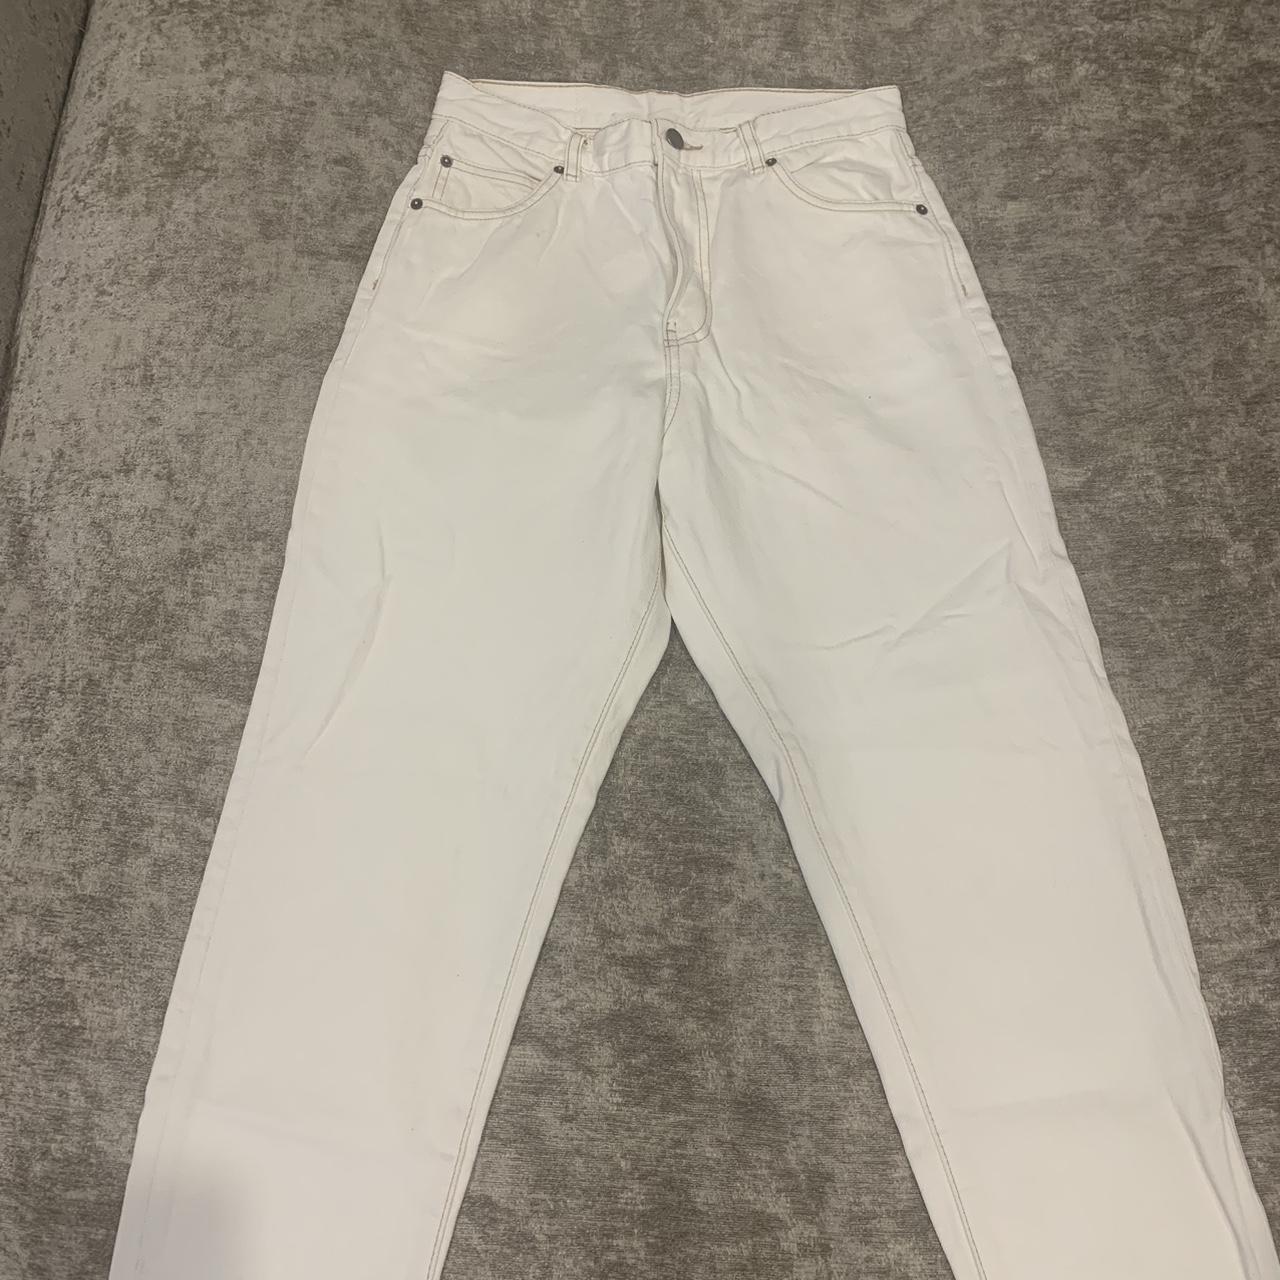 Dr. Denim Women's Cream and White Jeans